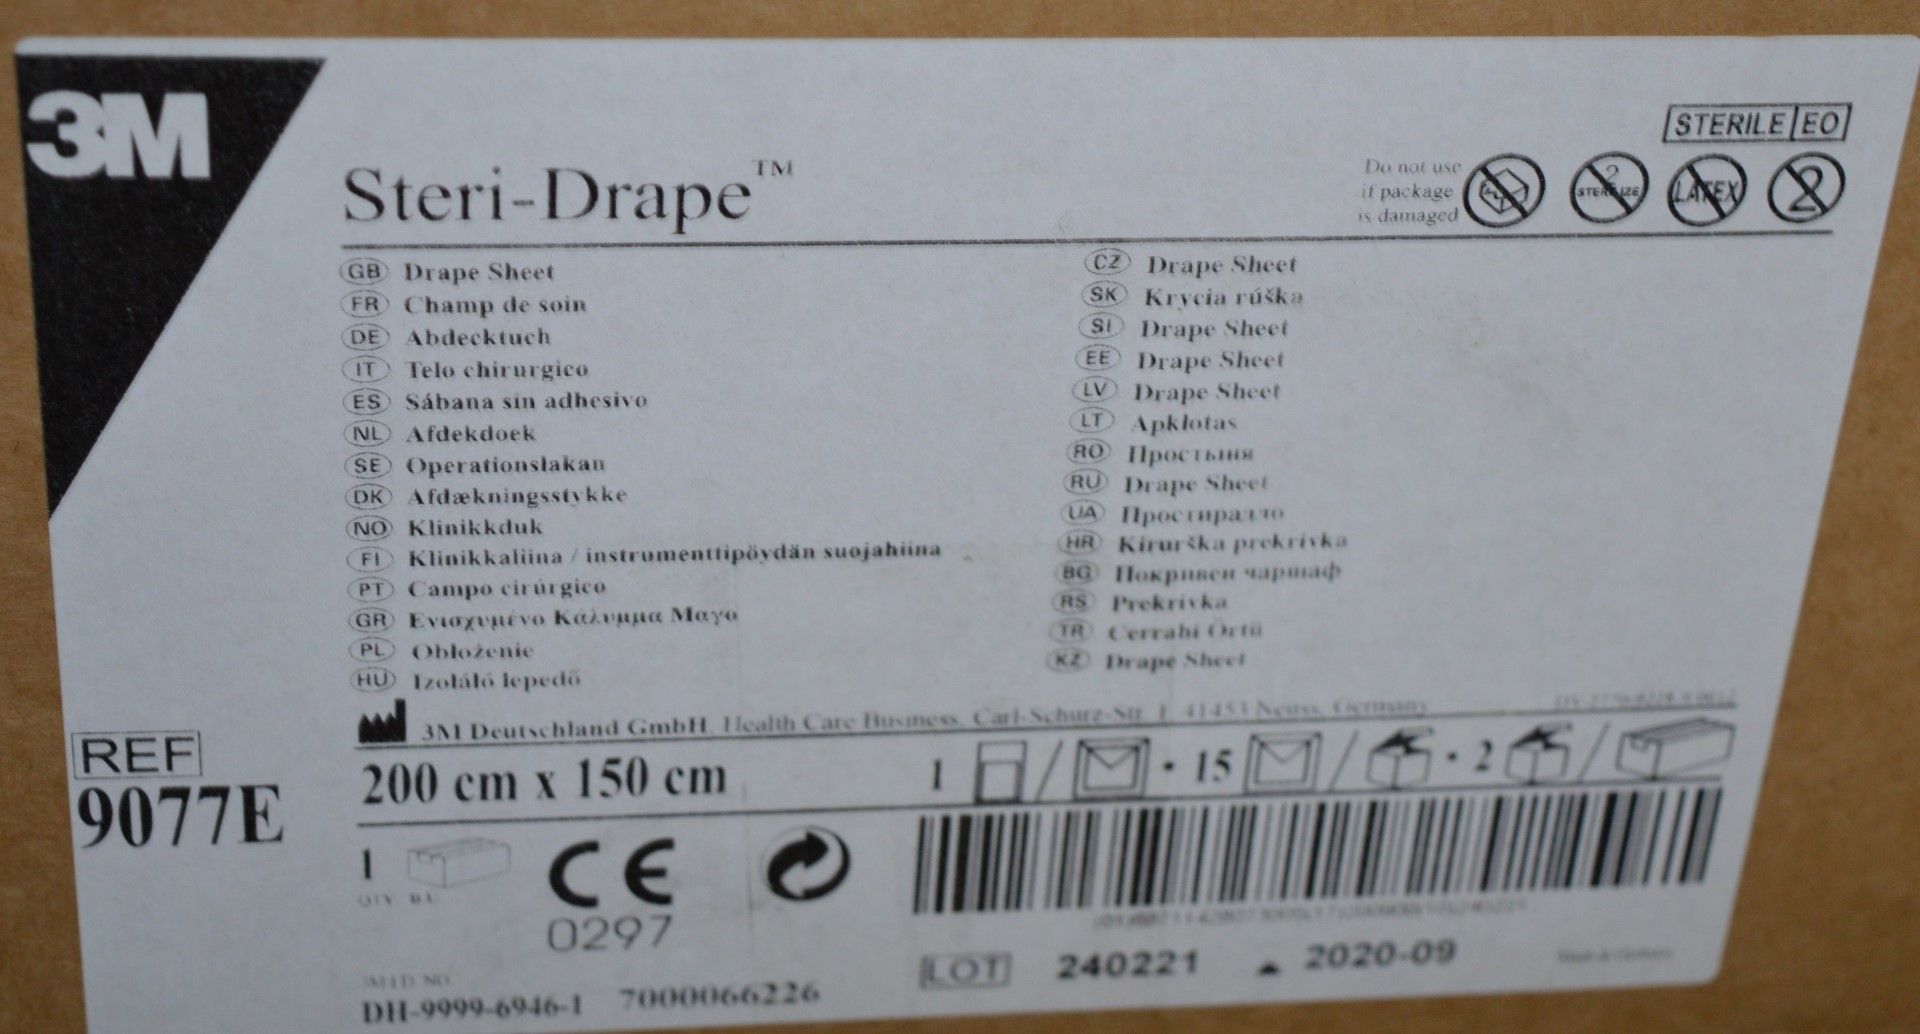 15 x 3M Steri-Drape Sheet Instrumental Table Covers - Product Code 9077E - Size 200x150cm - Brand - Image 3 of 5